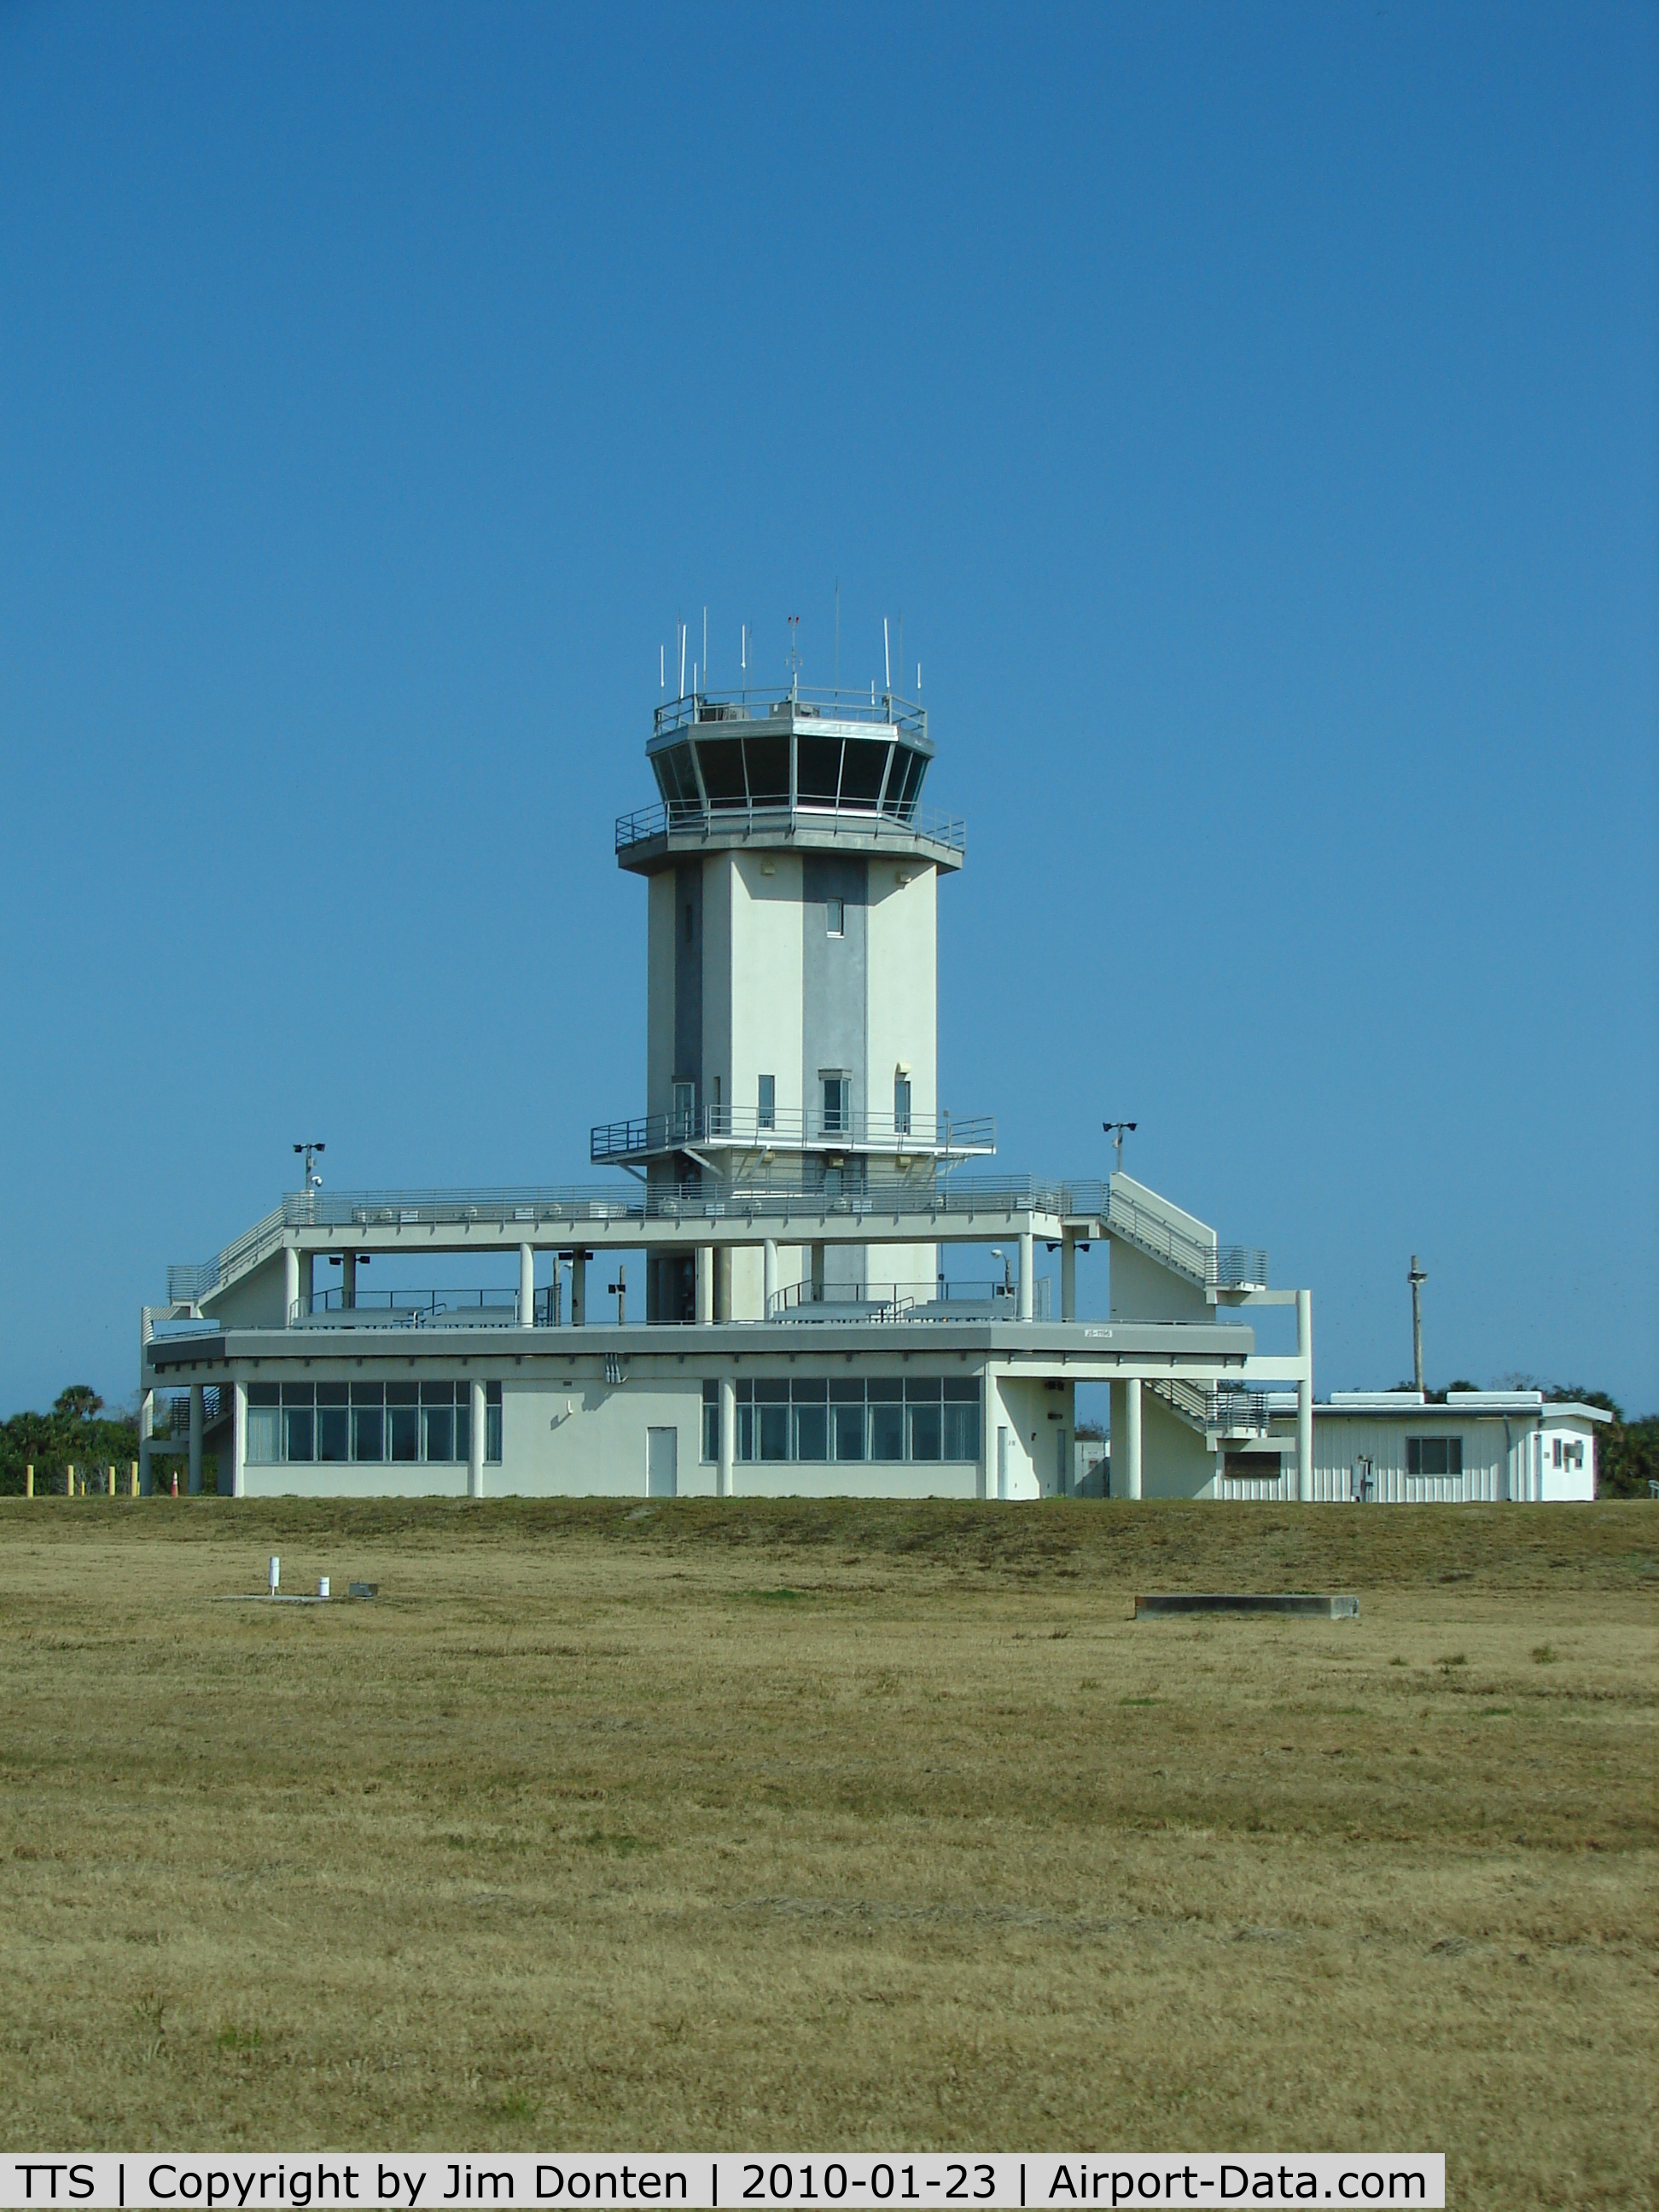 Nasa Shuttle Landing Facility Airport (TTS) - Tower at the Shuttle Landing Facility at Kennedy Space Center